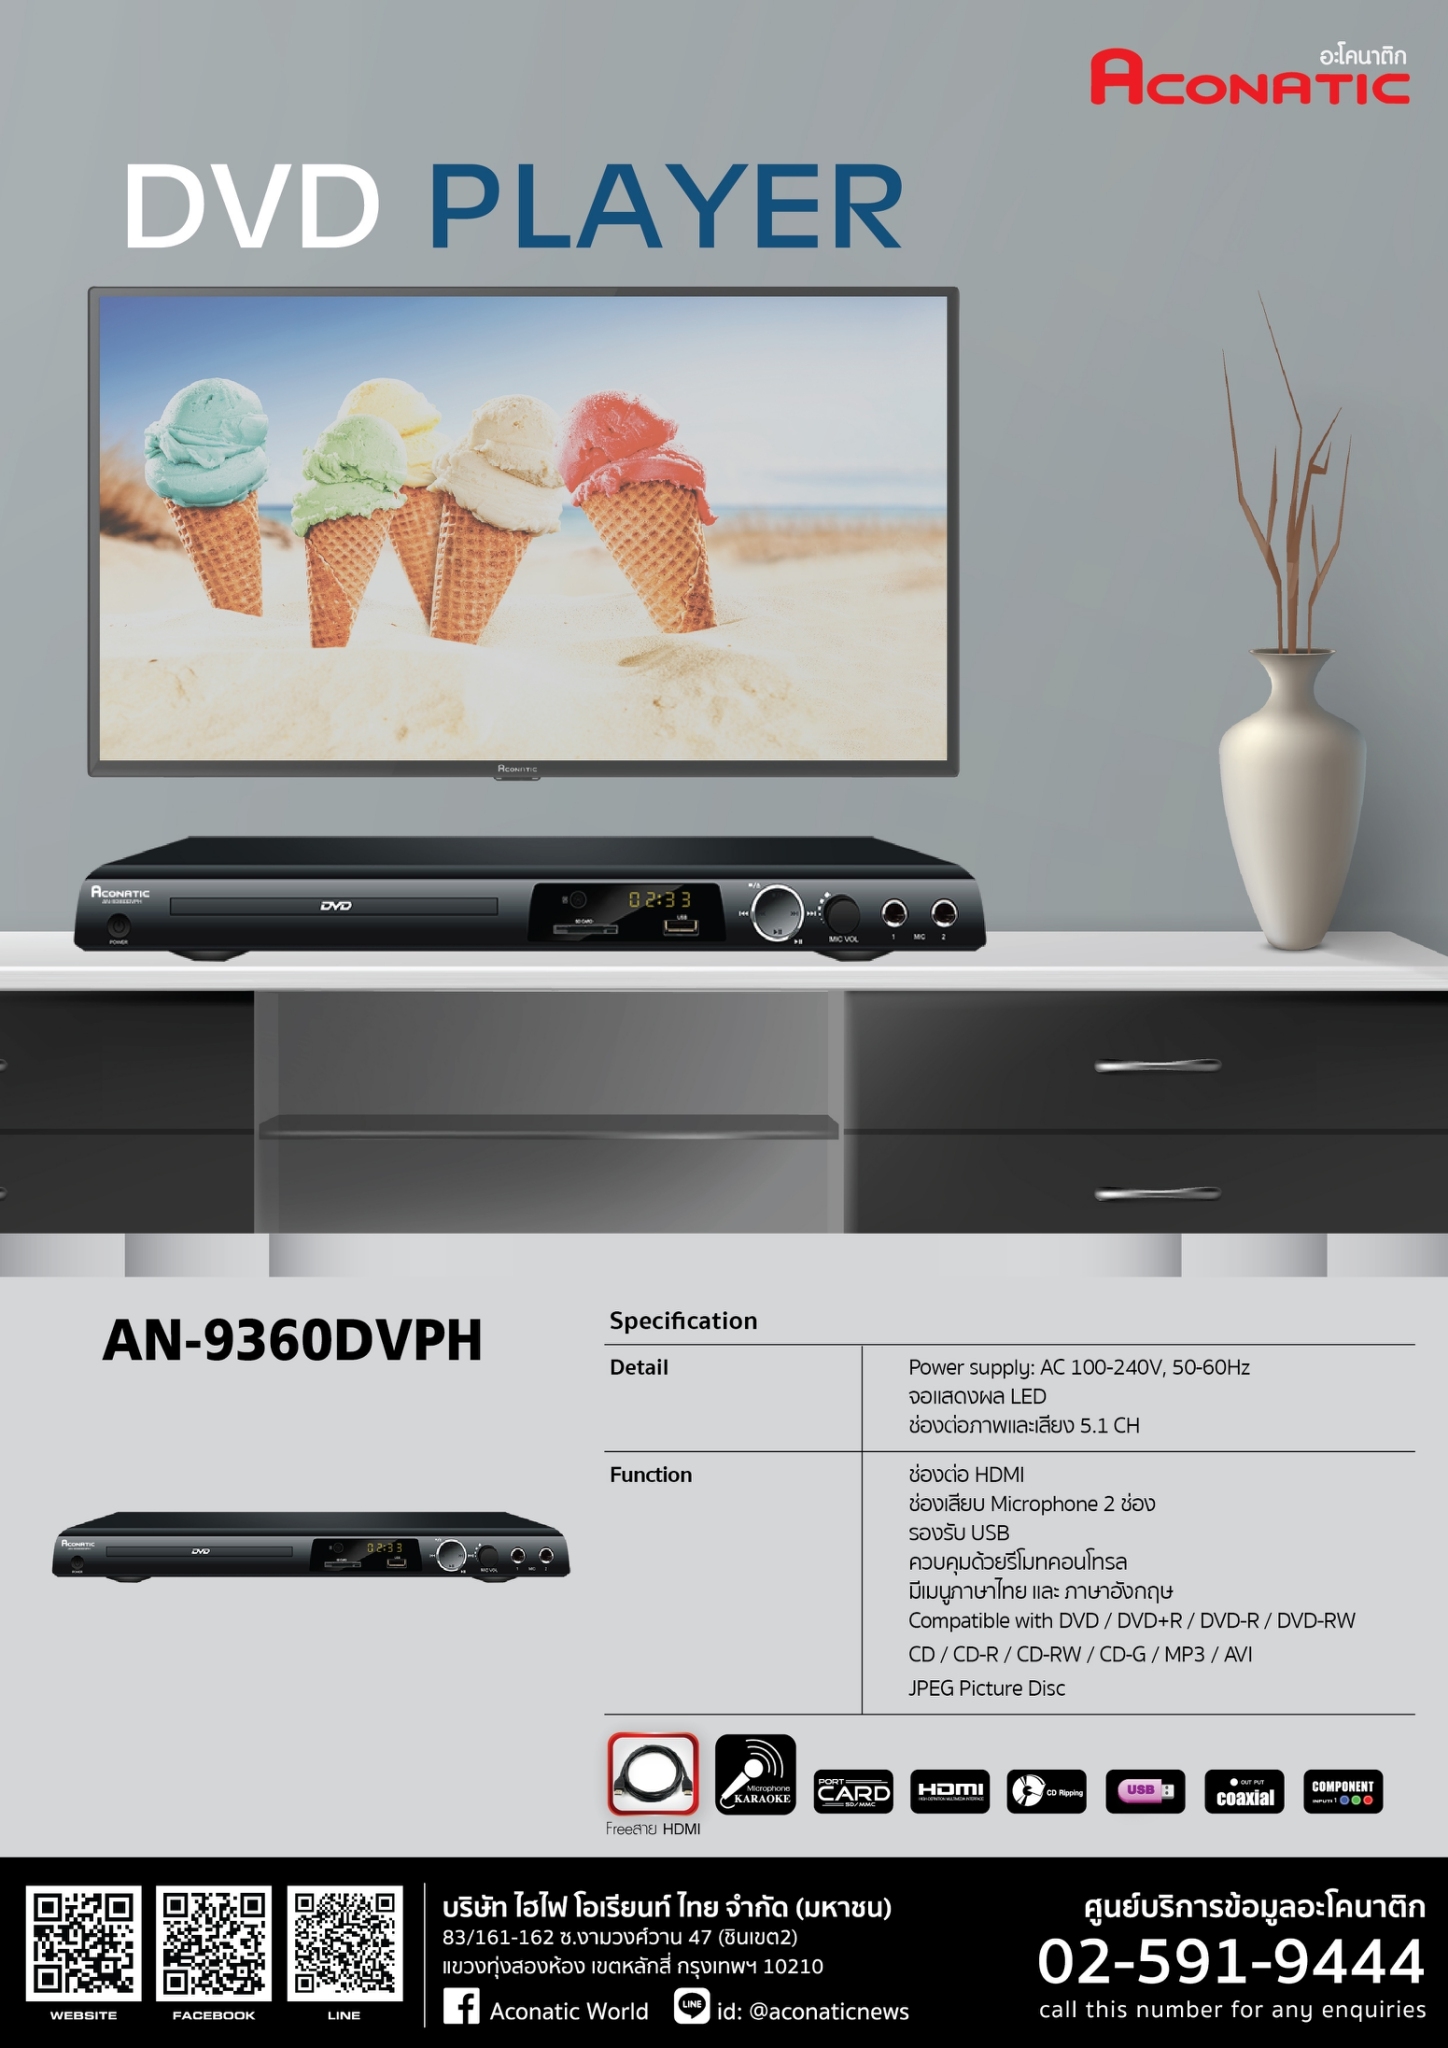 DVD PLAYER model AN-9360DVPH